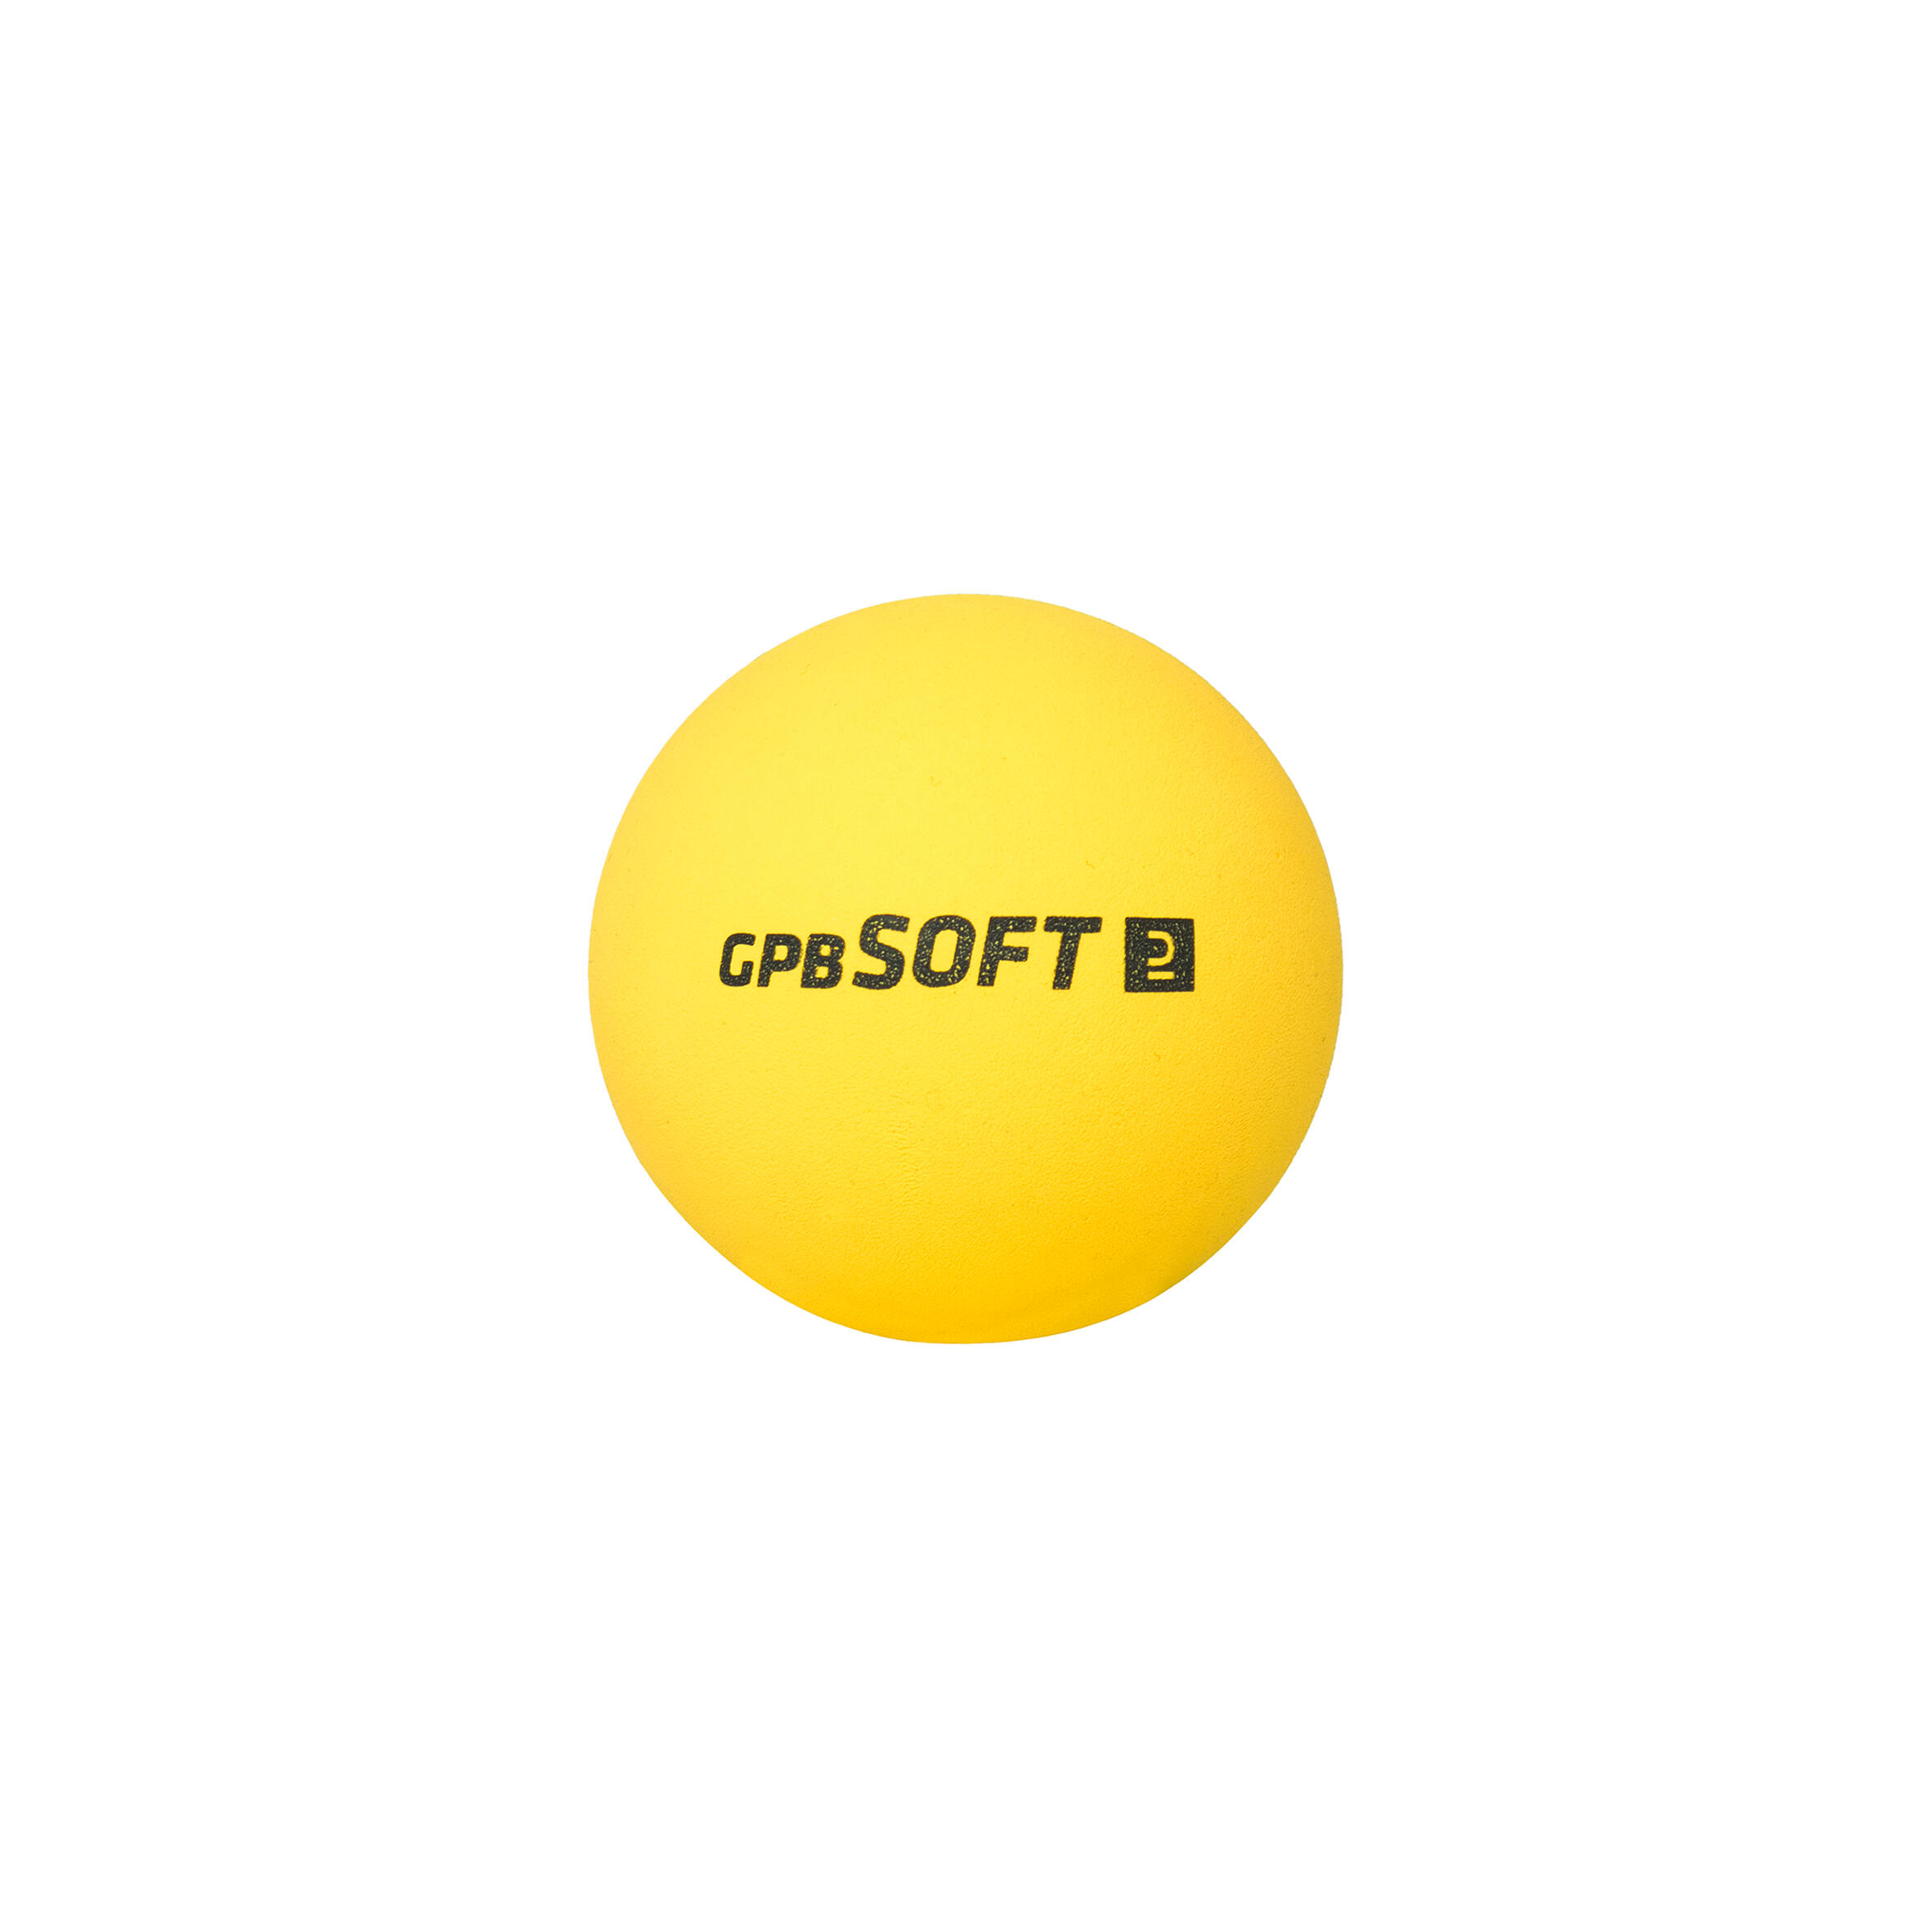 Beginner Pelota Balls GPB Soft x2 - Yellow/Turquoise Blue 2/4